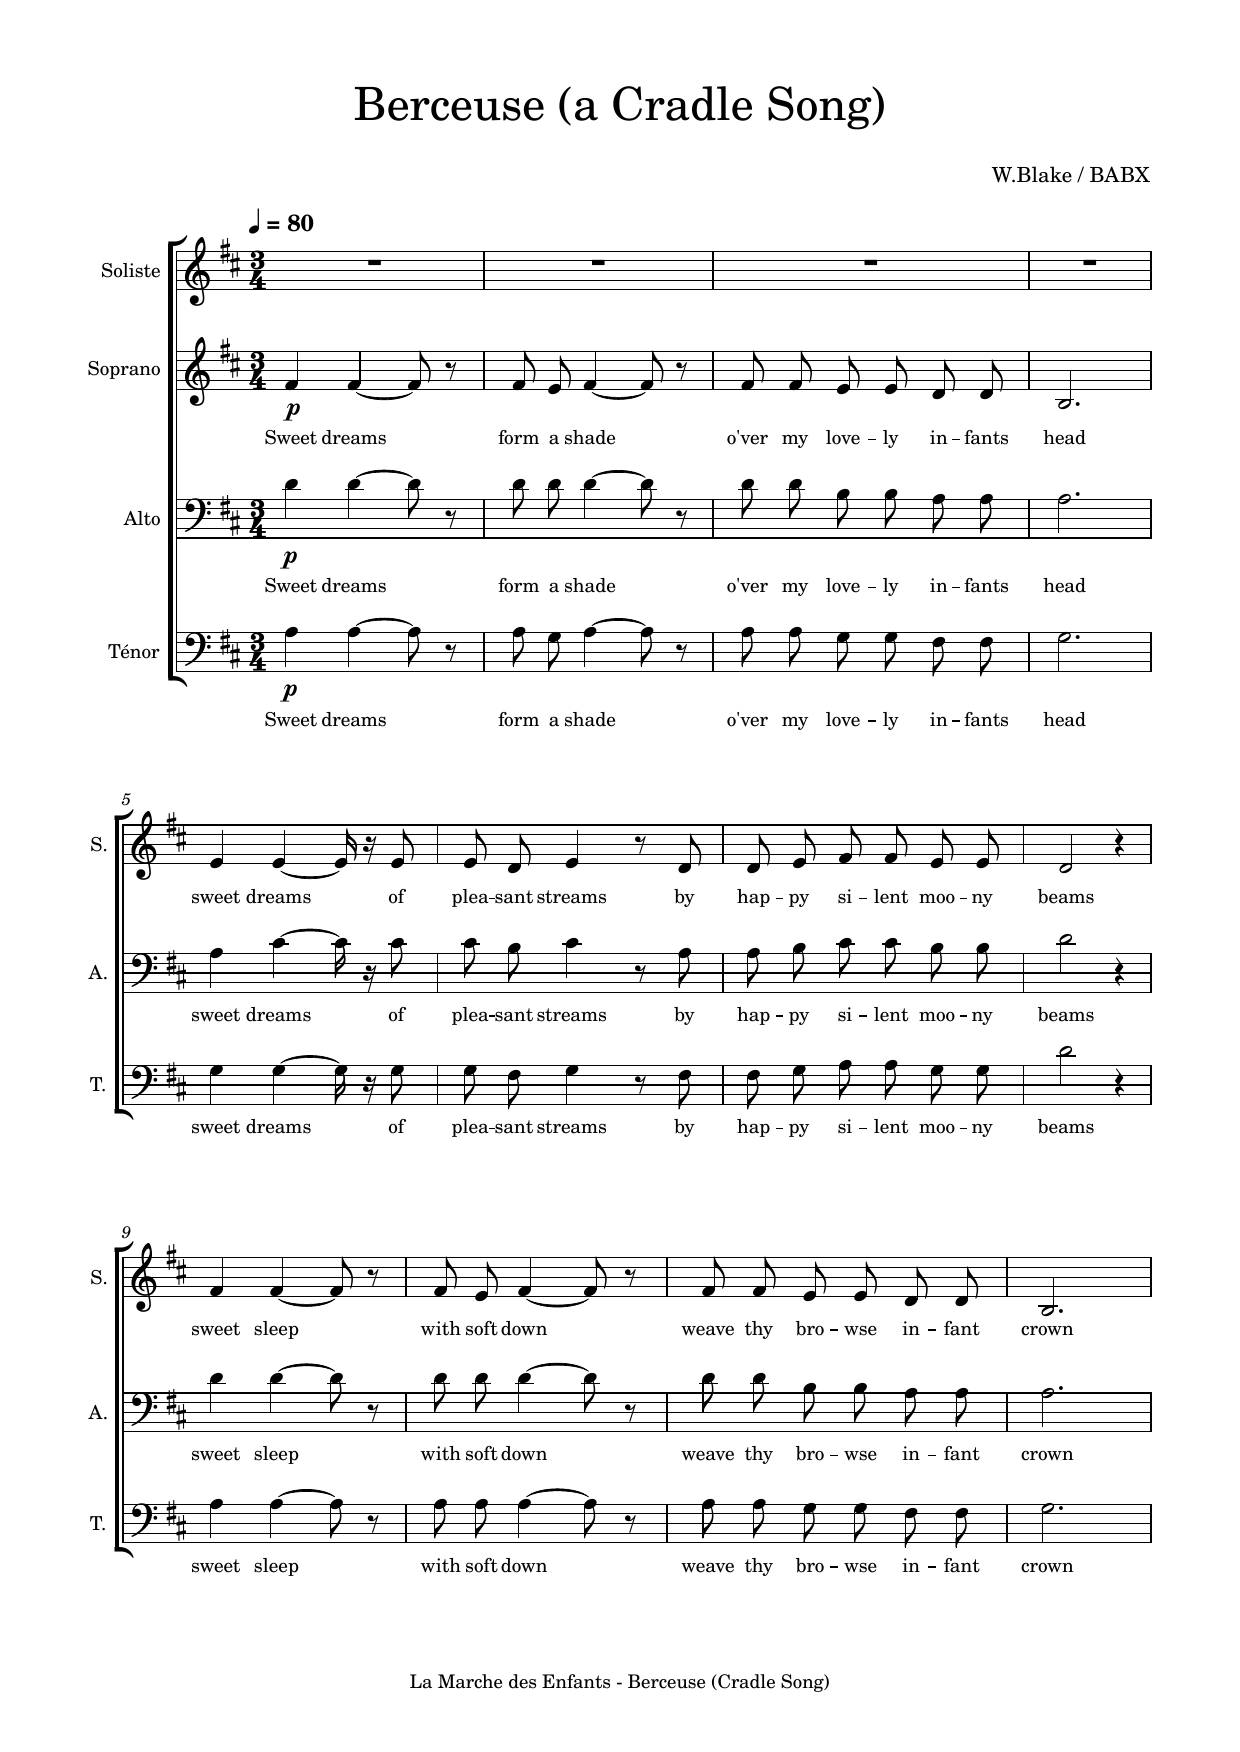 David Babin (Babx) Berceuse (A Cradle Song) sheet music notes printable PDF score